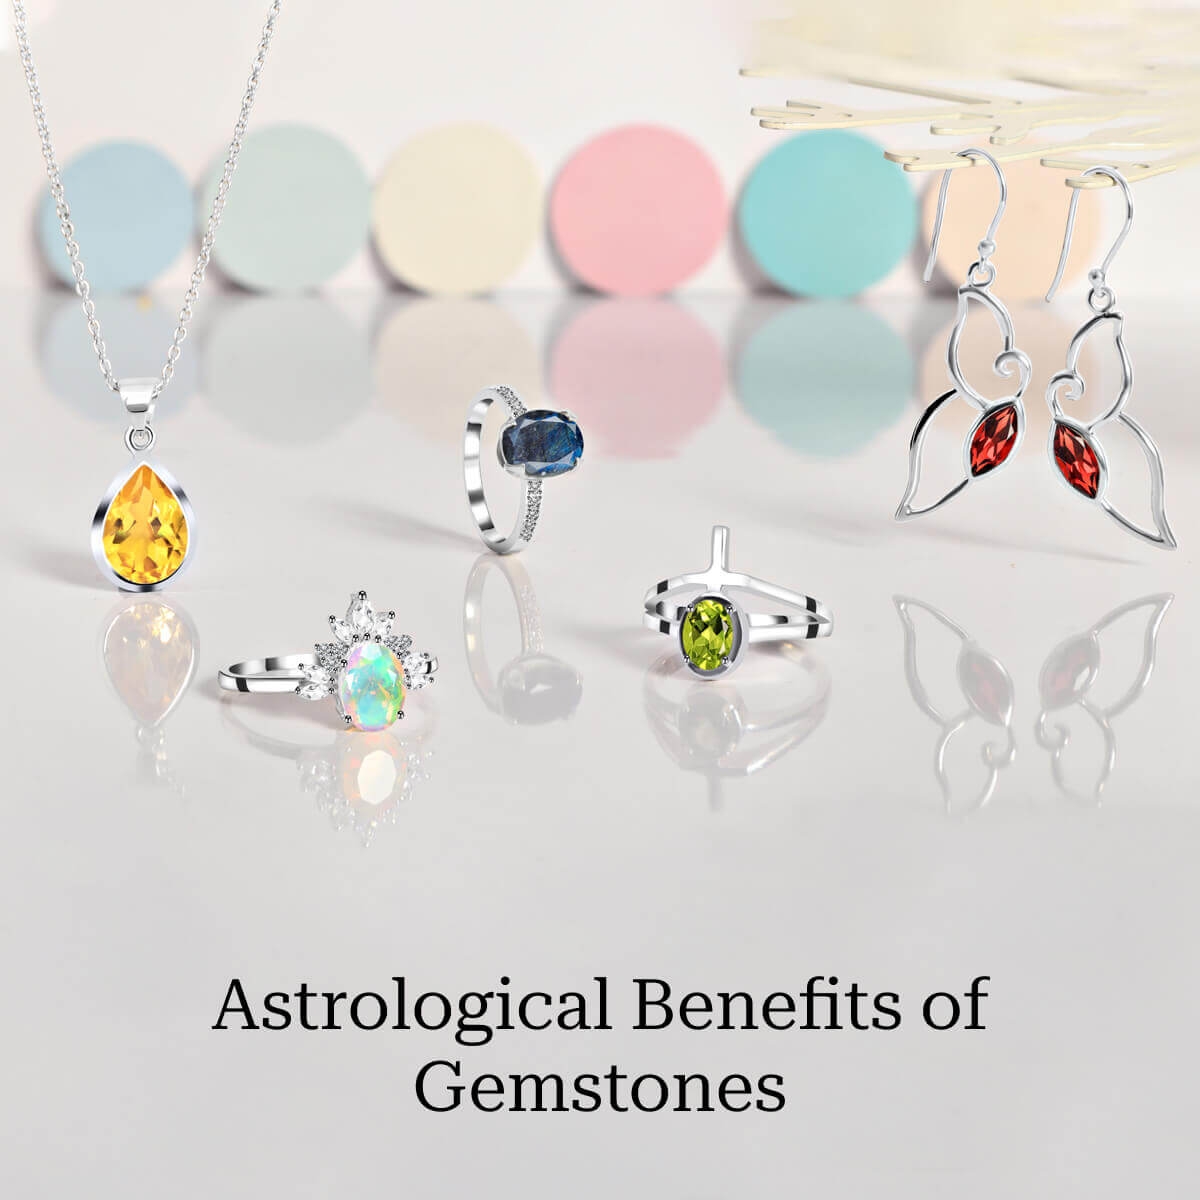 Astrological benefits of wearing gemstones